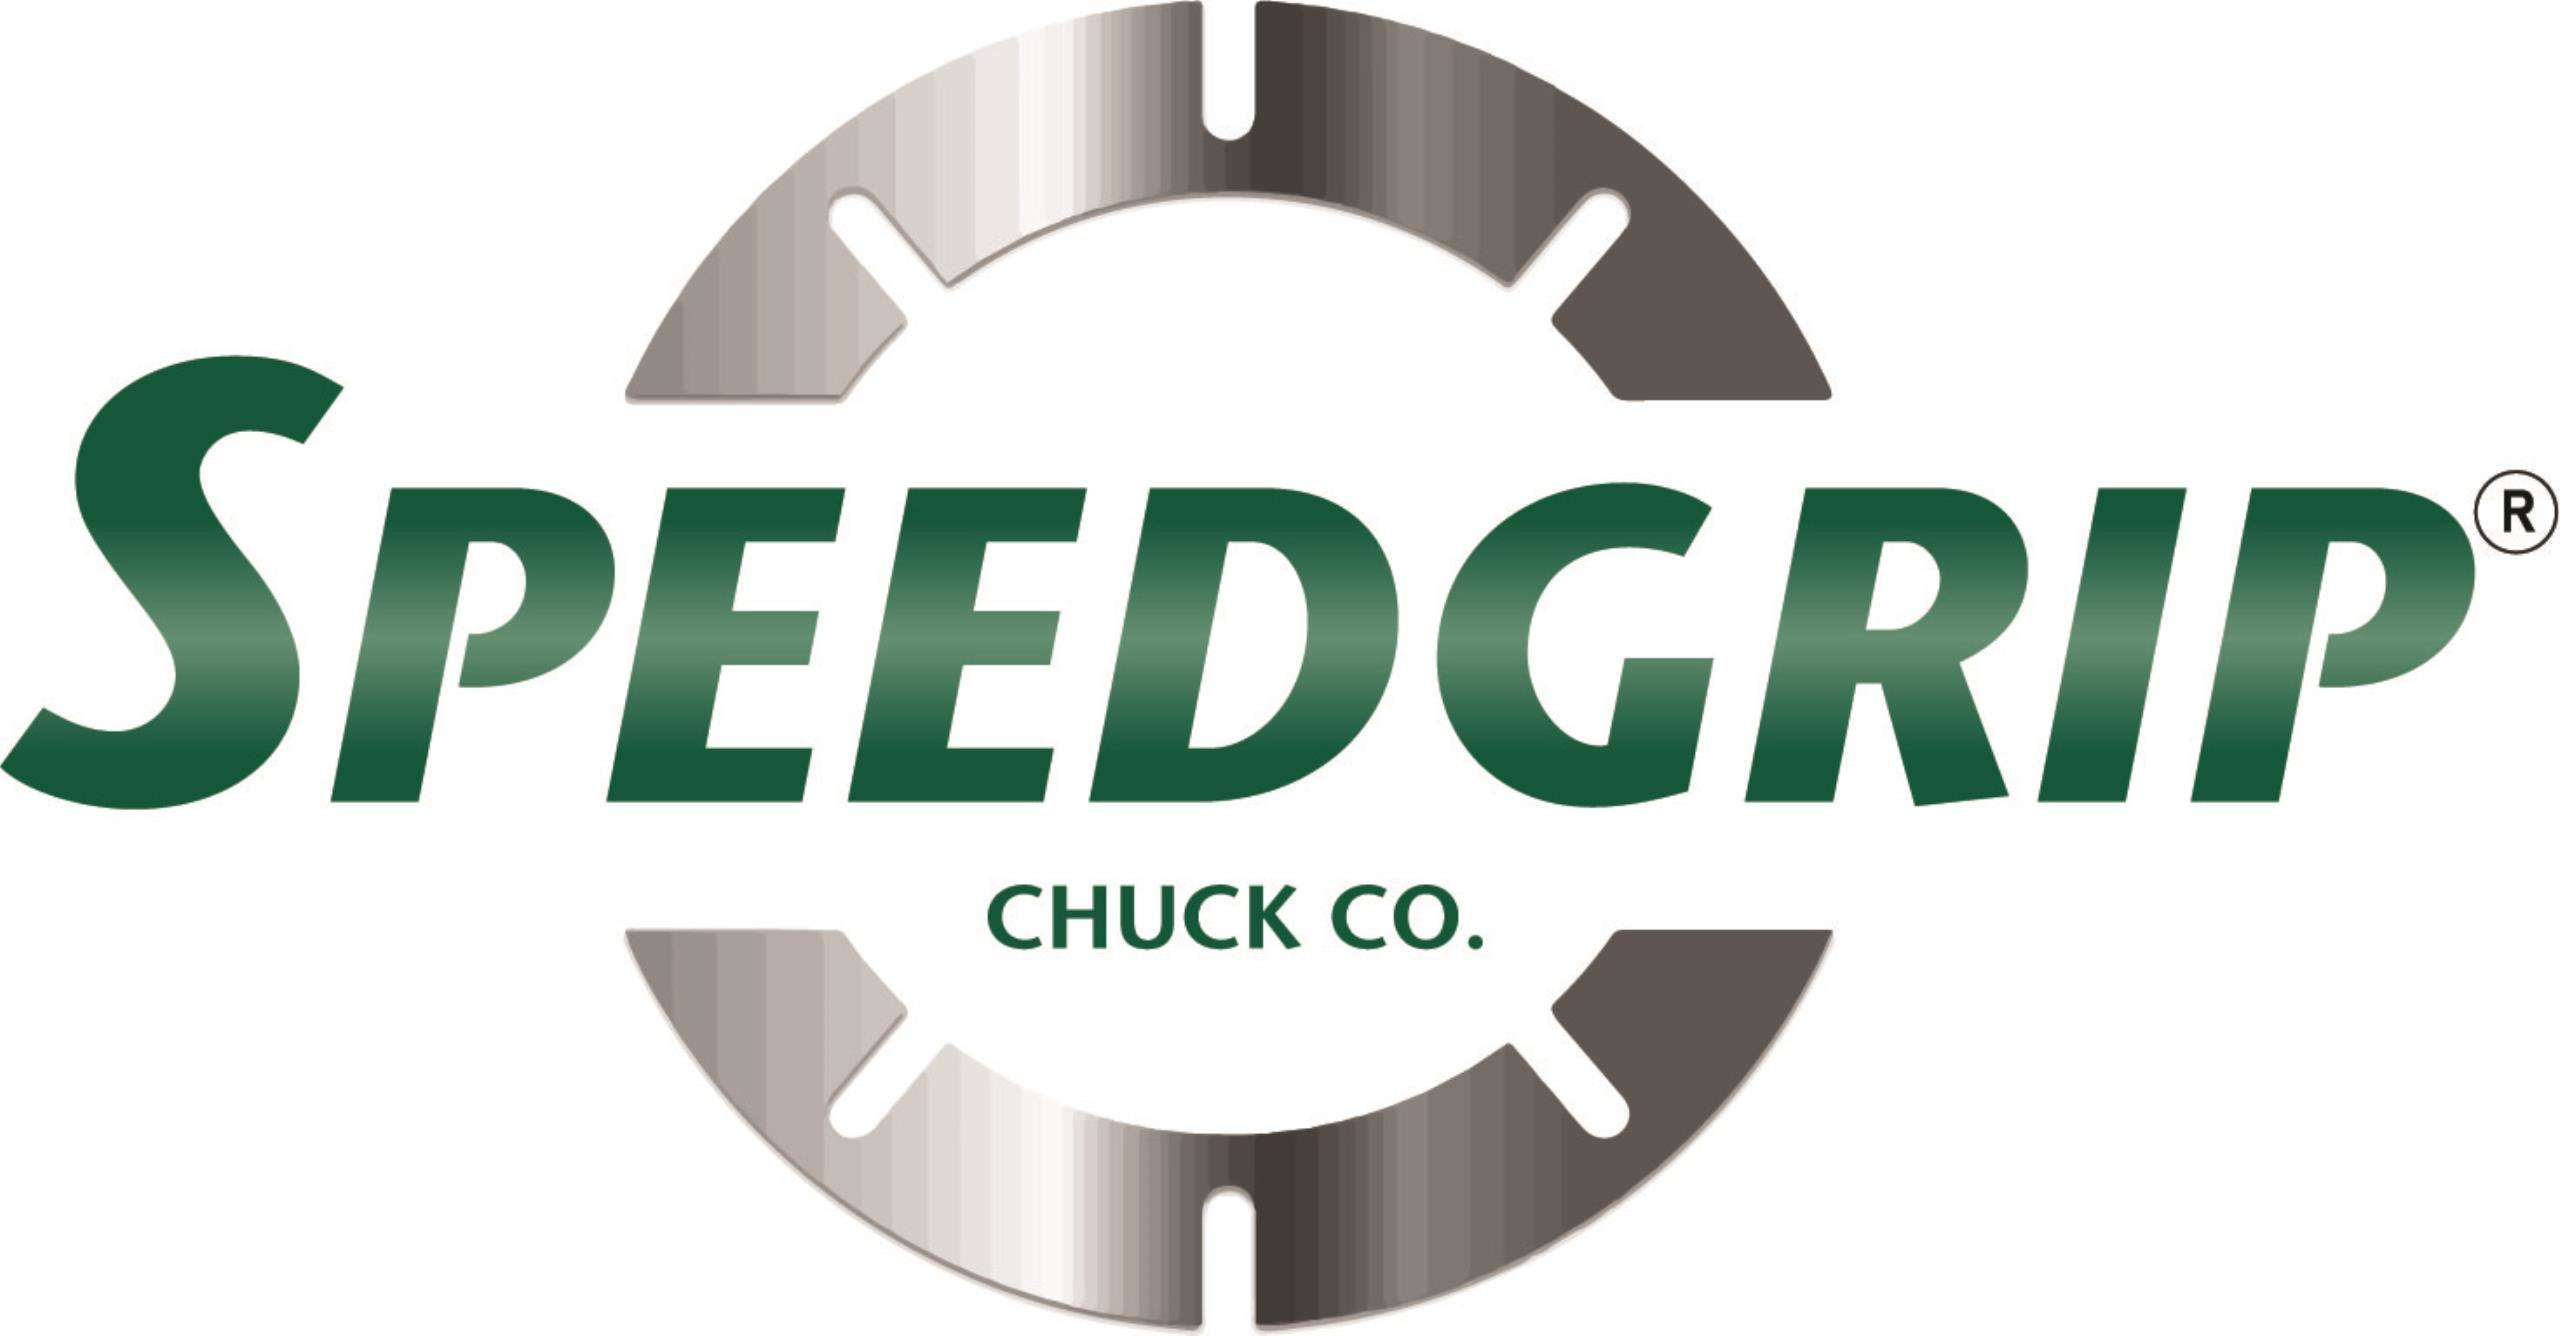 Speedgrip Chuck Company Logo